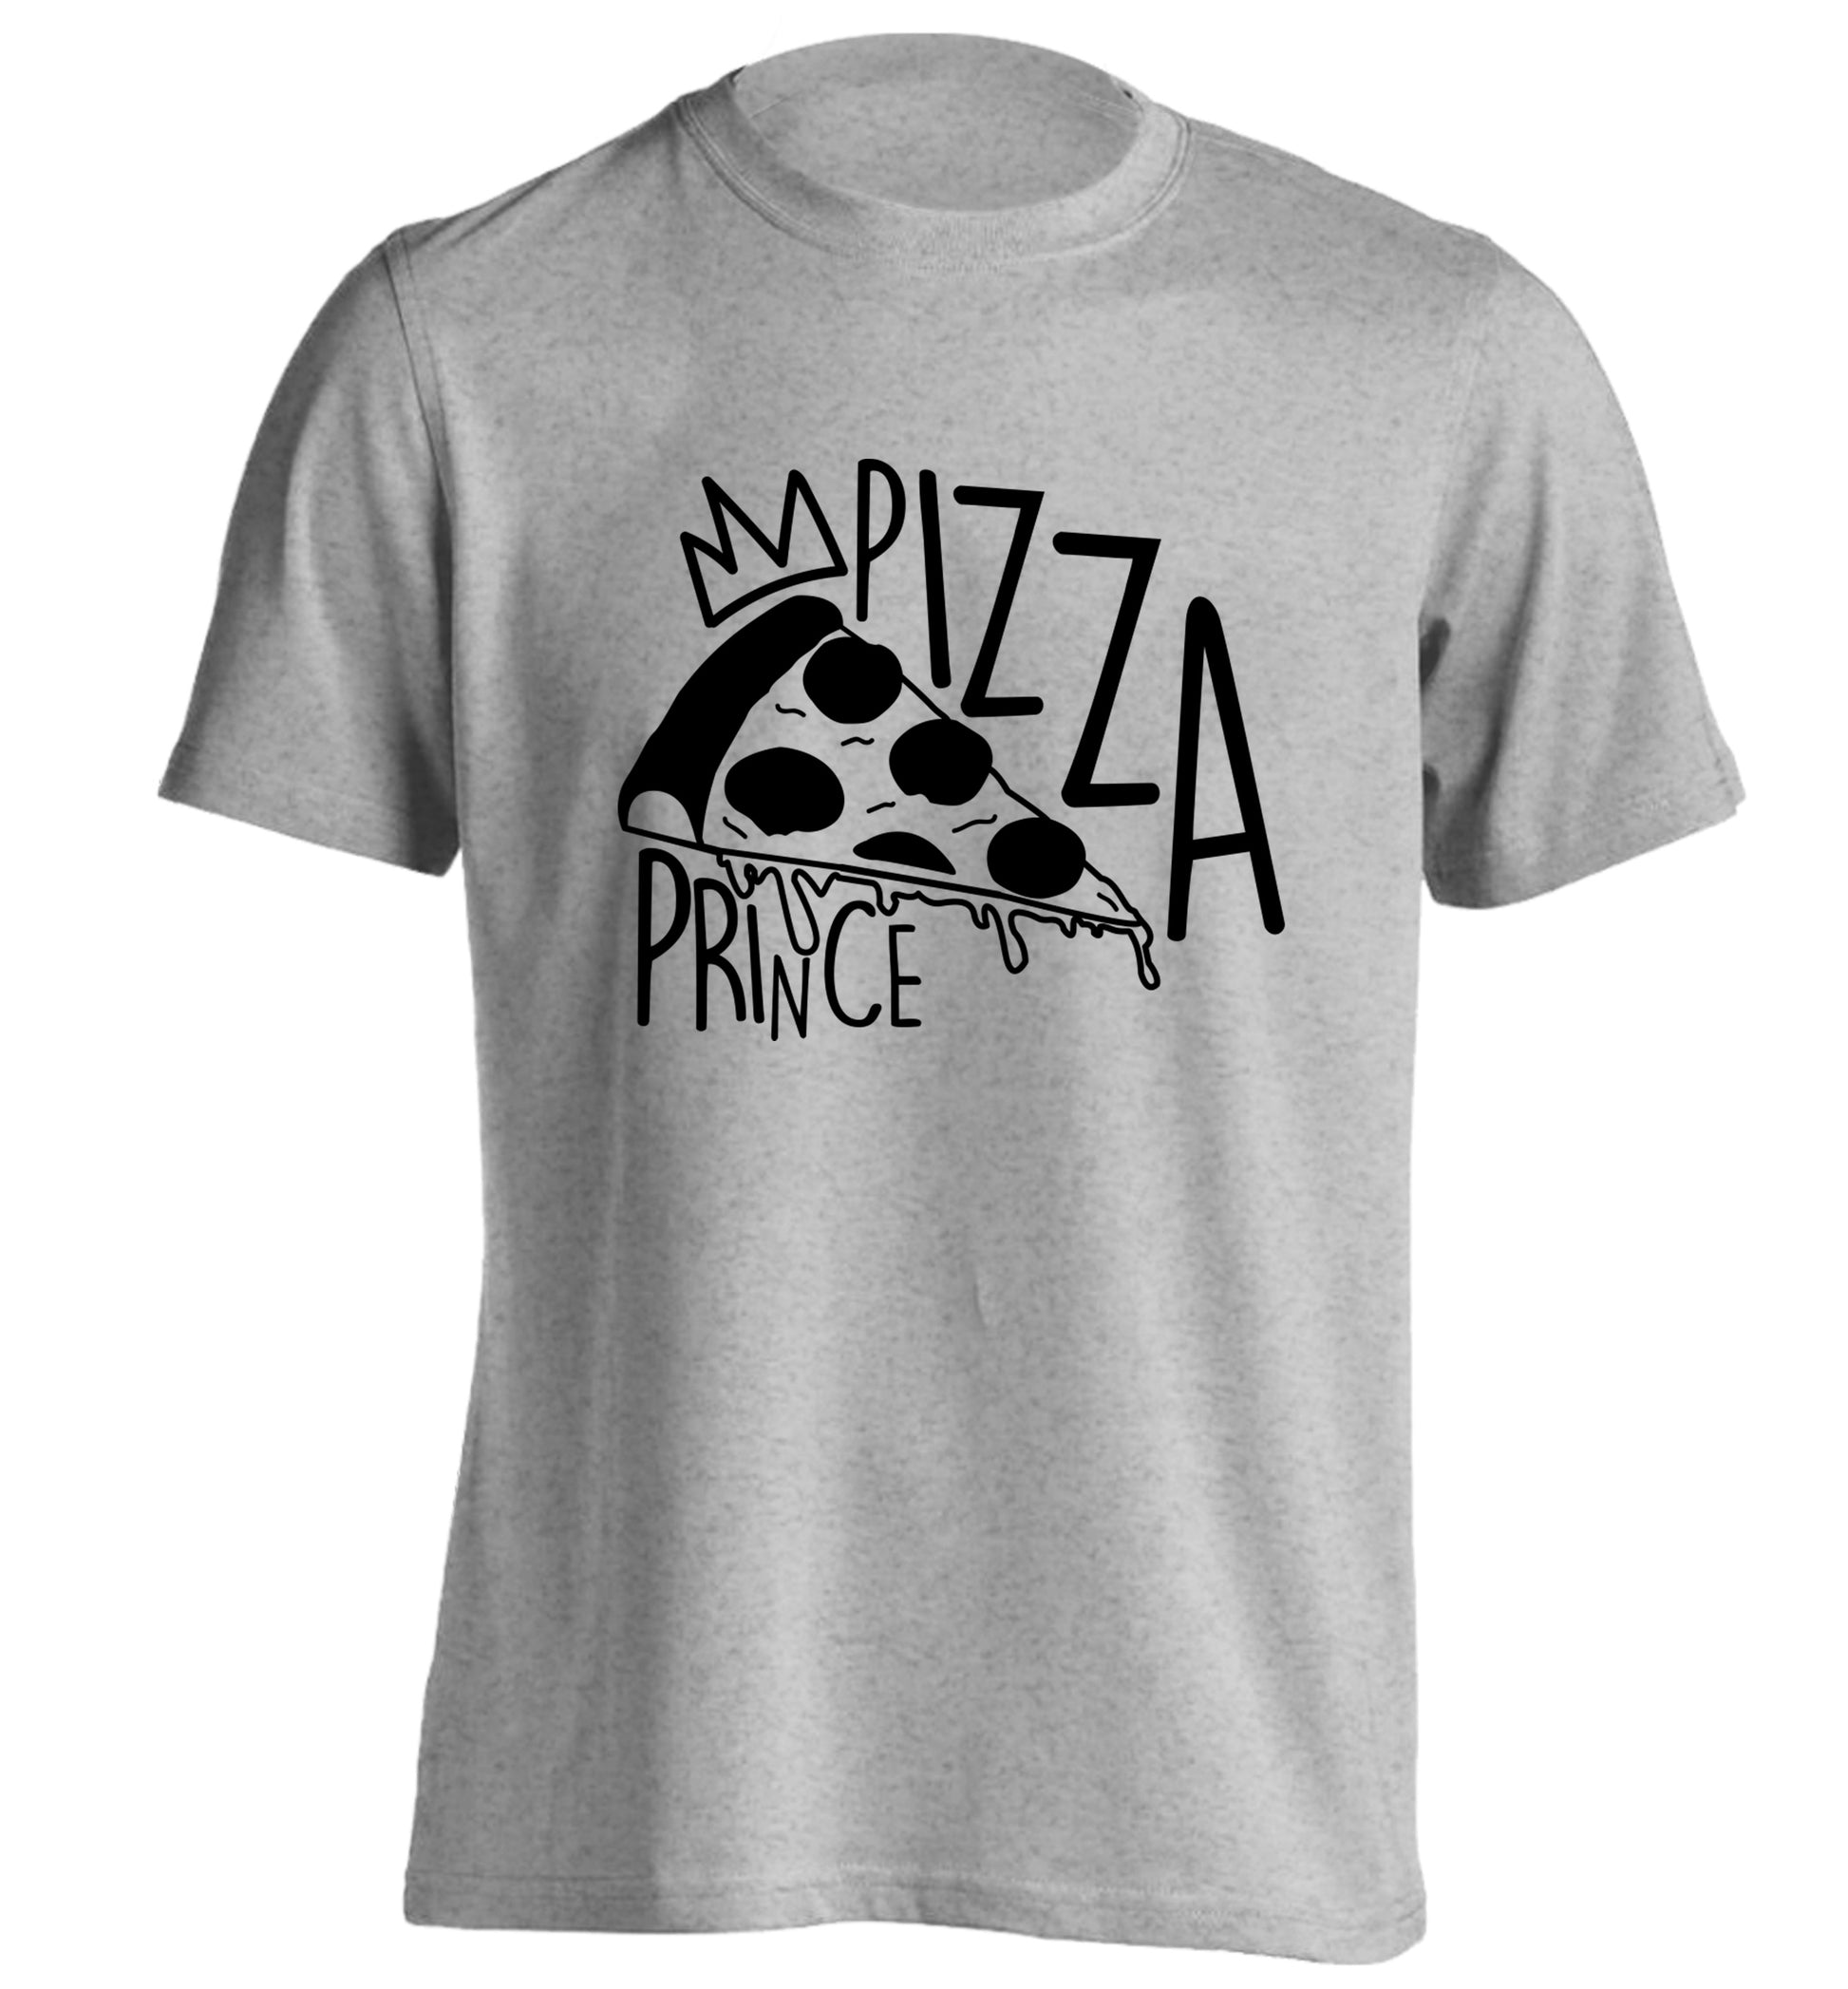 Pizza Prince adults unisex grey Tshirt 2XL